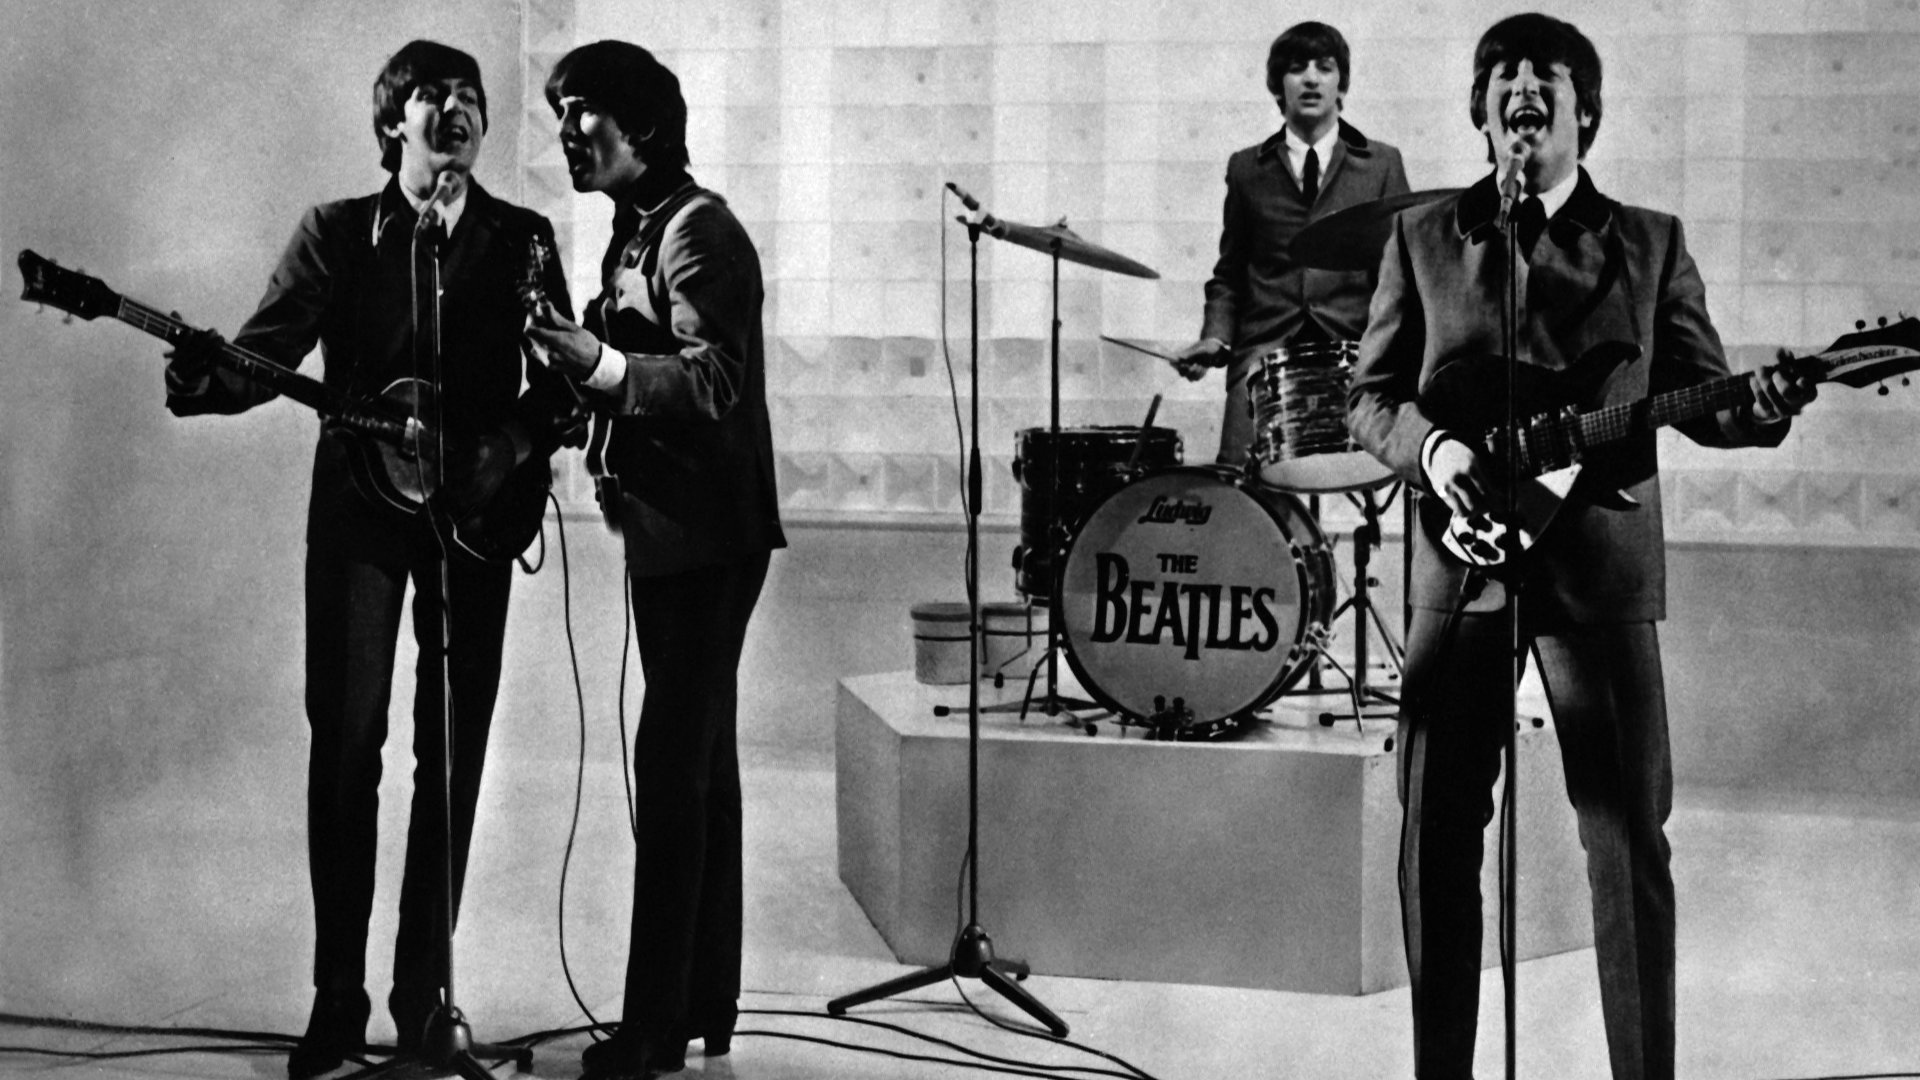 The Beatles, BBC Four